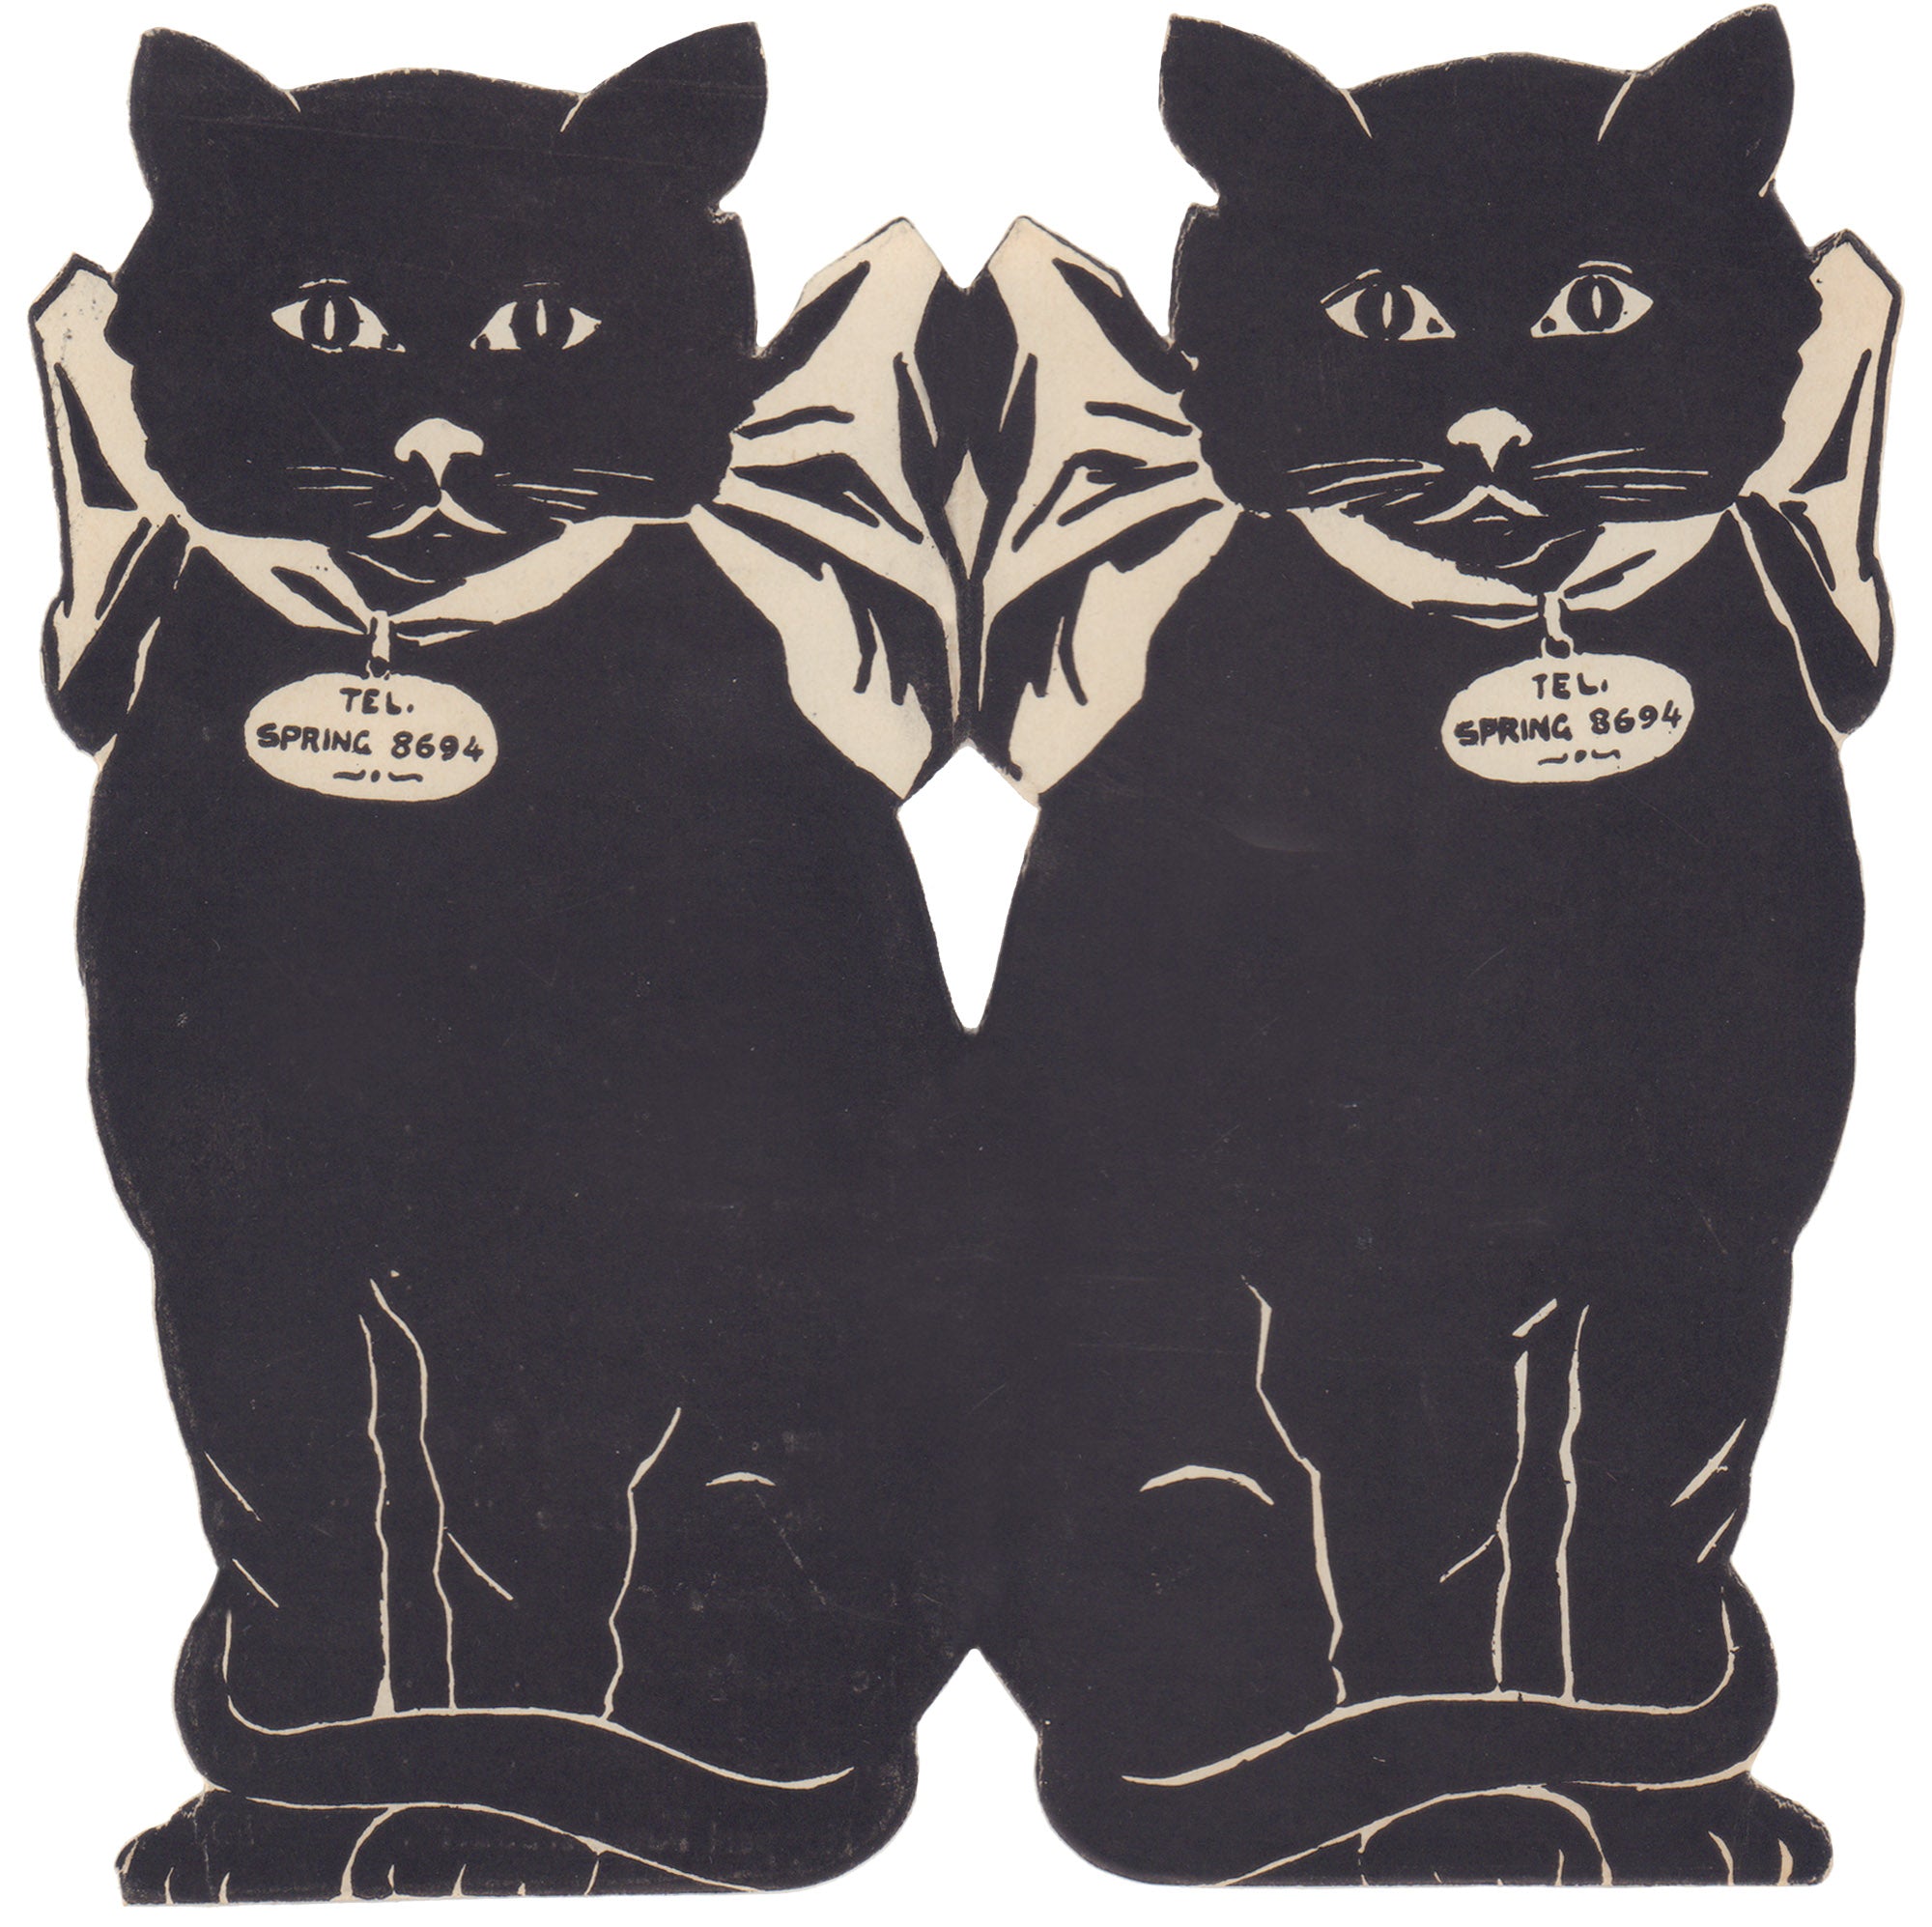 The Black Cat, New York 1920s Menu Design